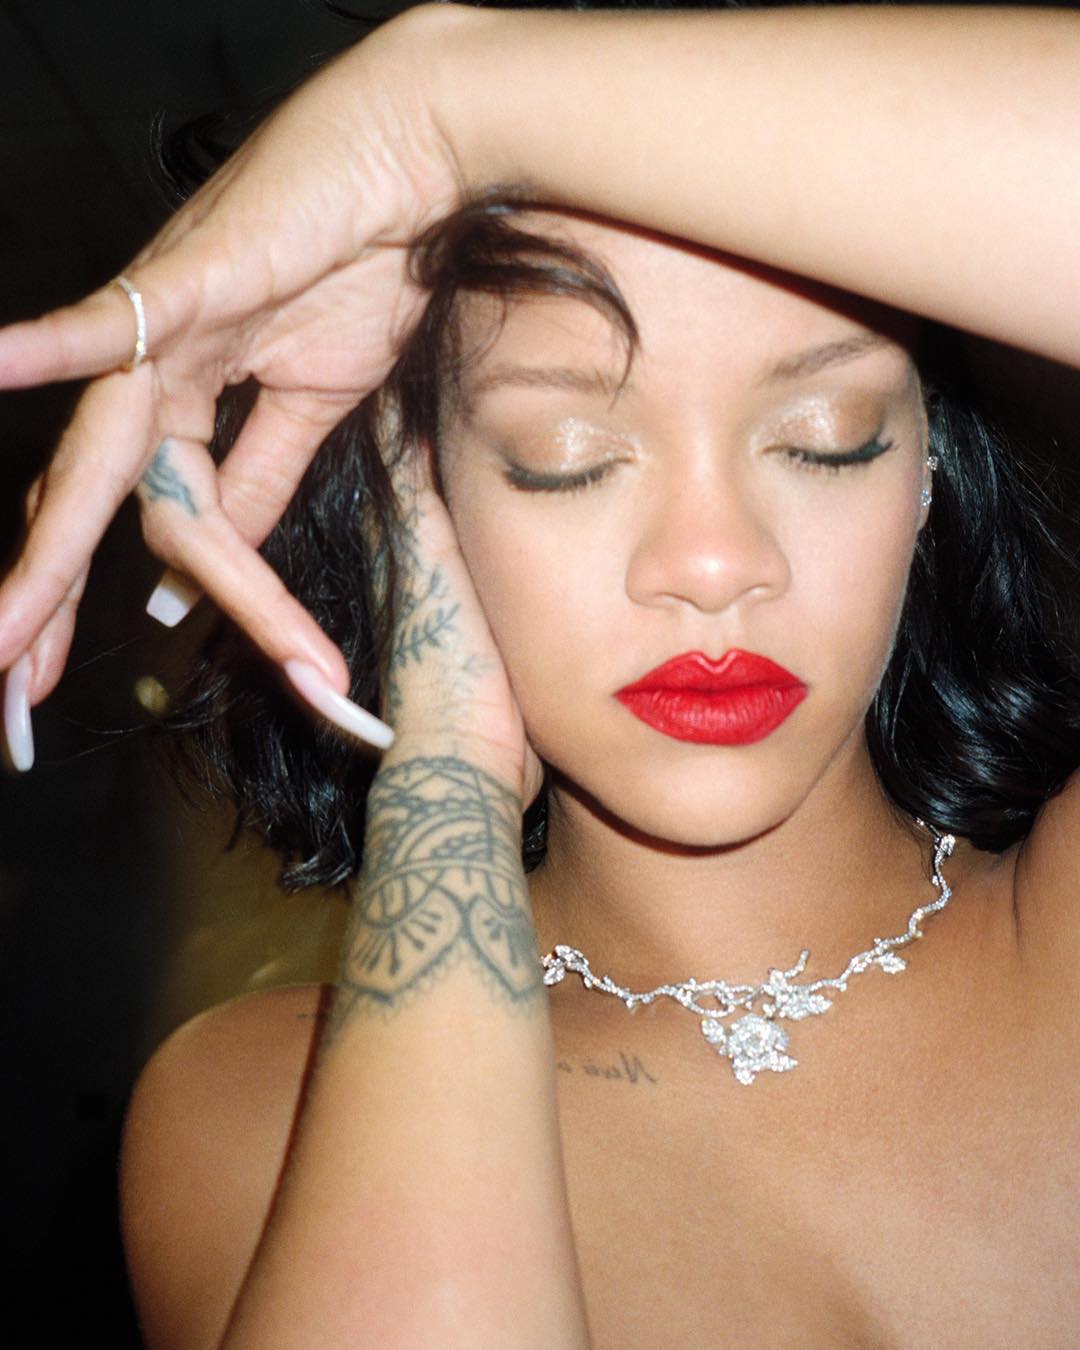 Rihanna â€“ @badgalriri Instagram photos